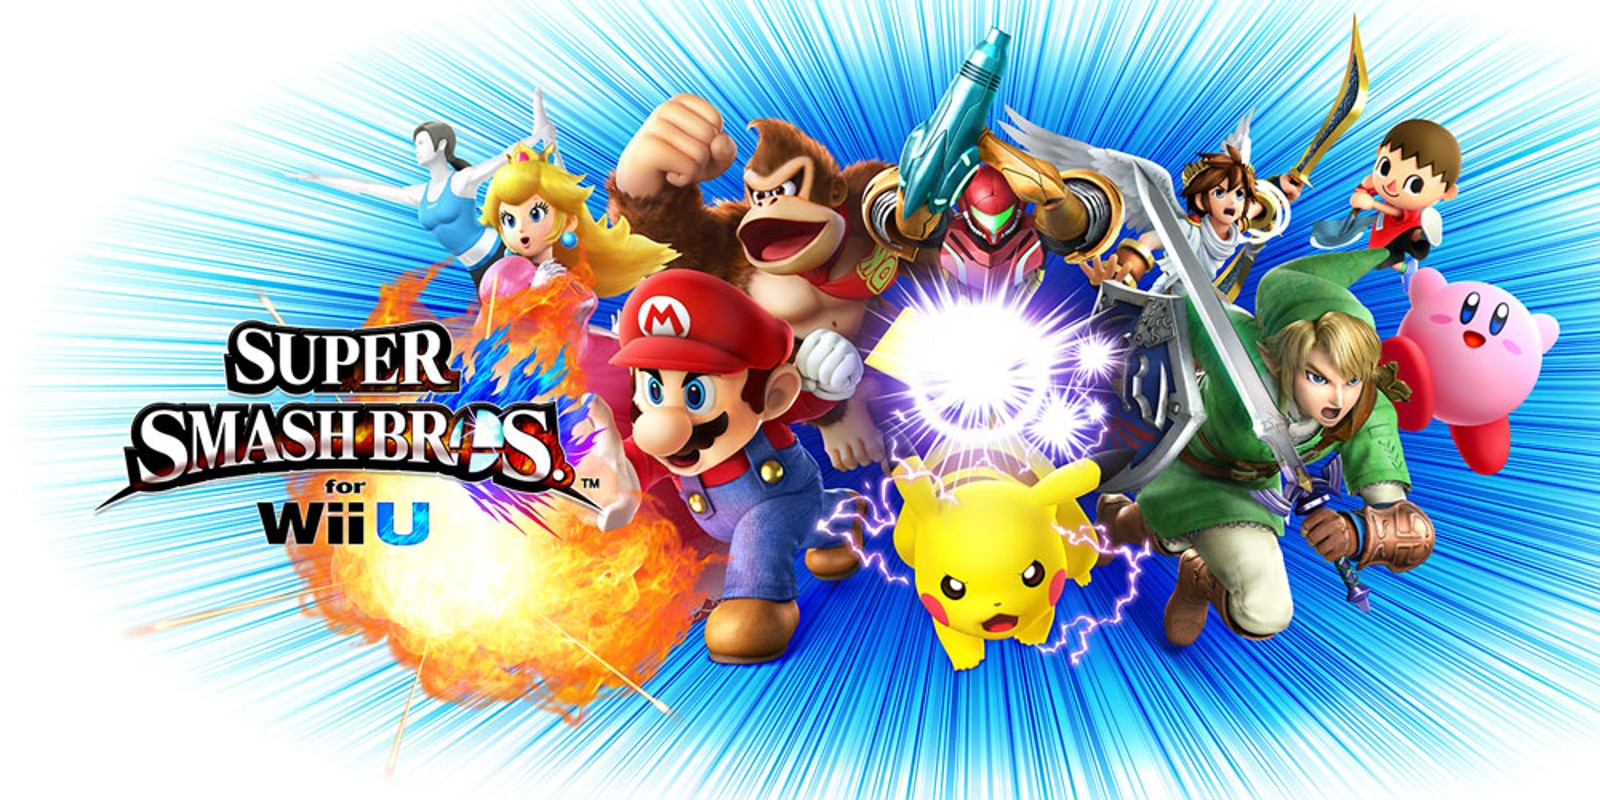 Super Smash Bros Wii Super Smash Bros. for Wii U | Wii U games | Games | Nintendo